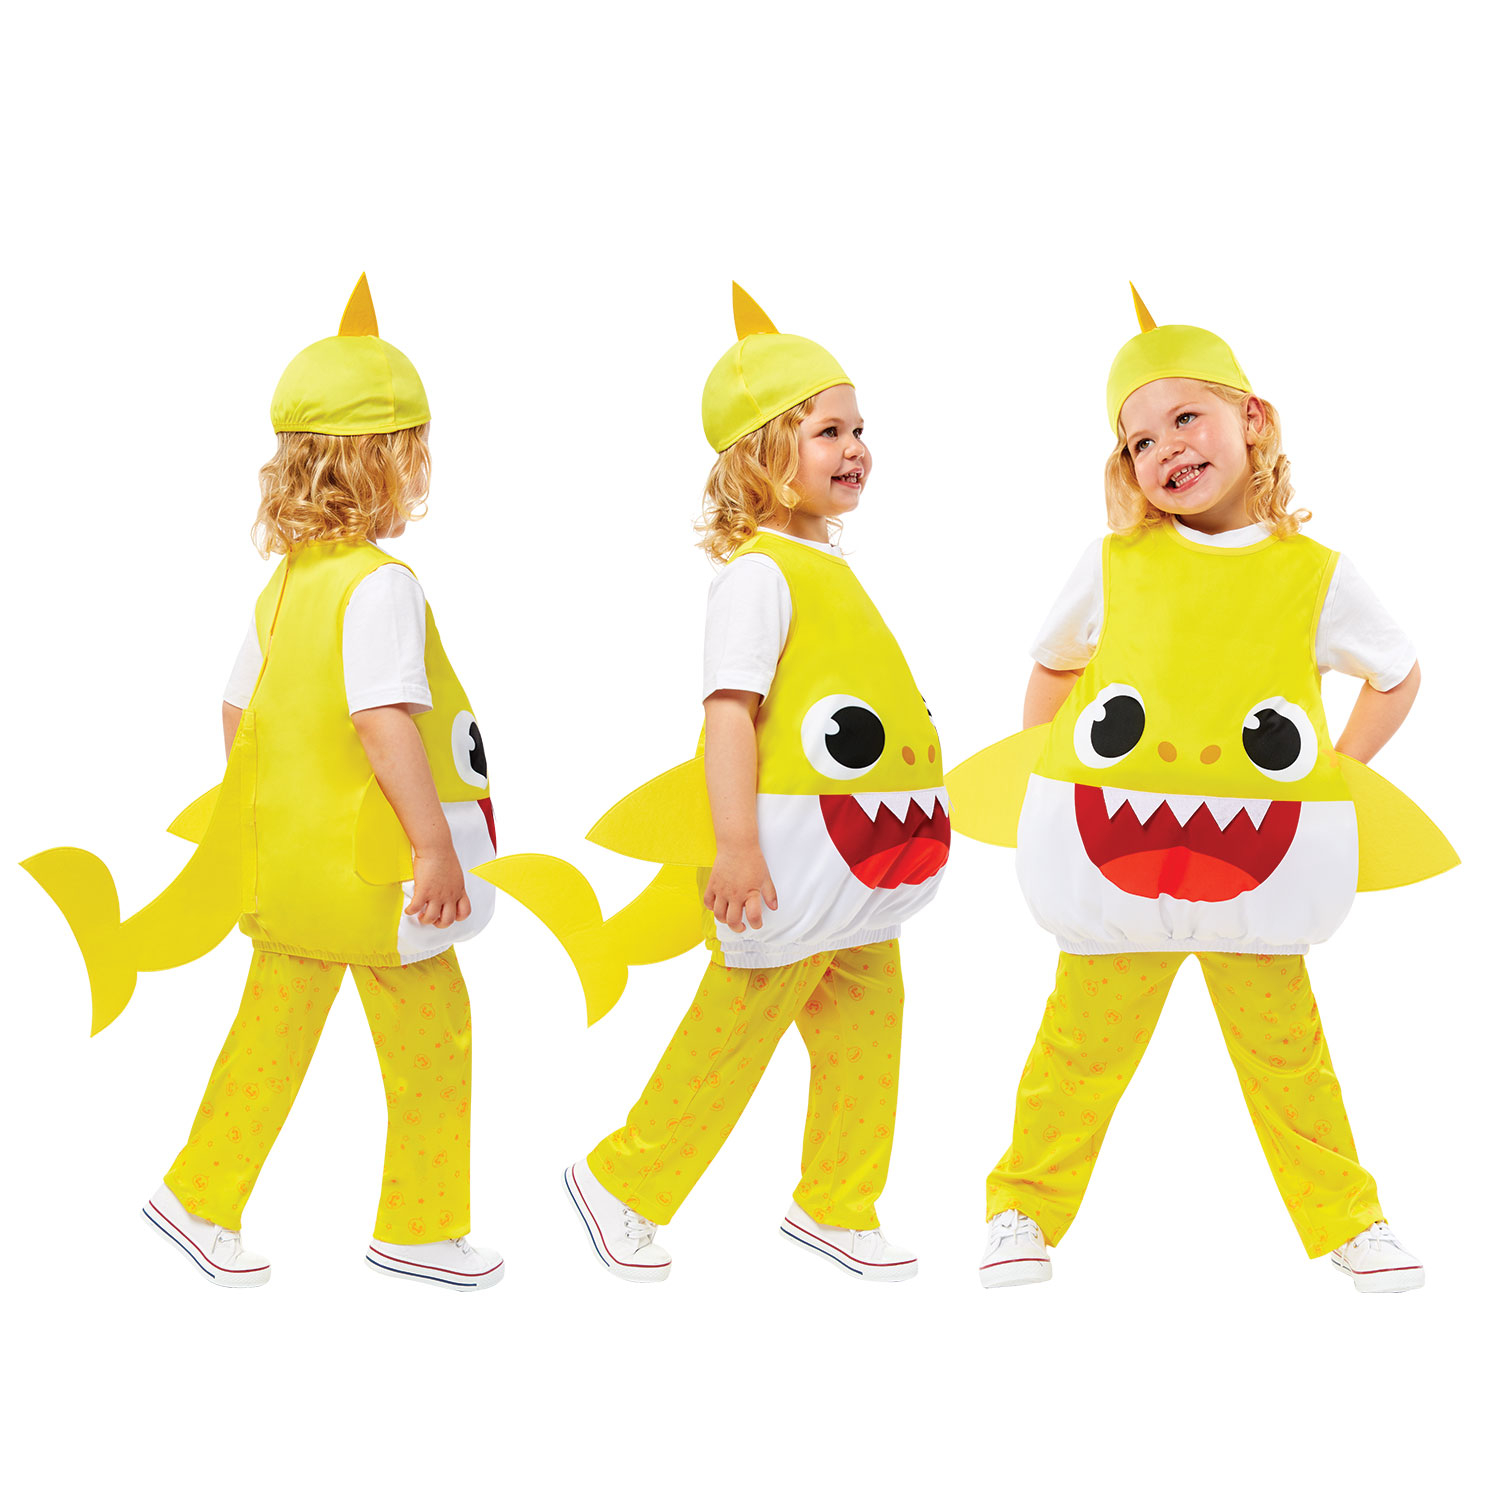 Baby Shark Yellow Costumes - Age 1-2 Years - 1 PC : Amscan International